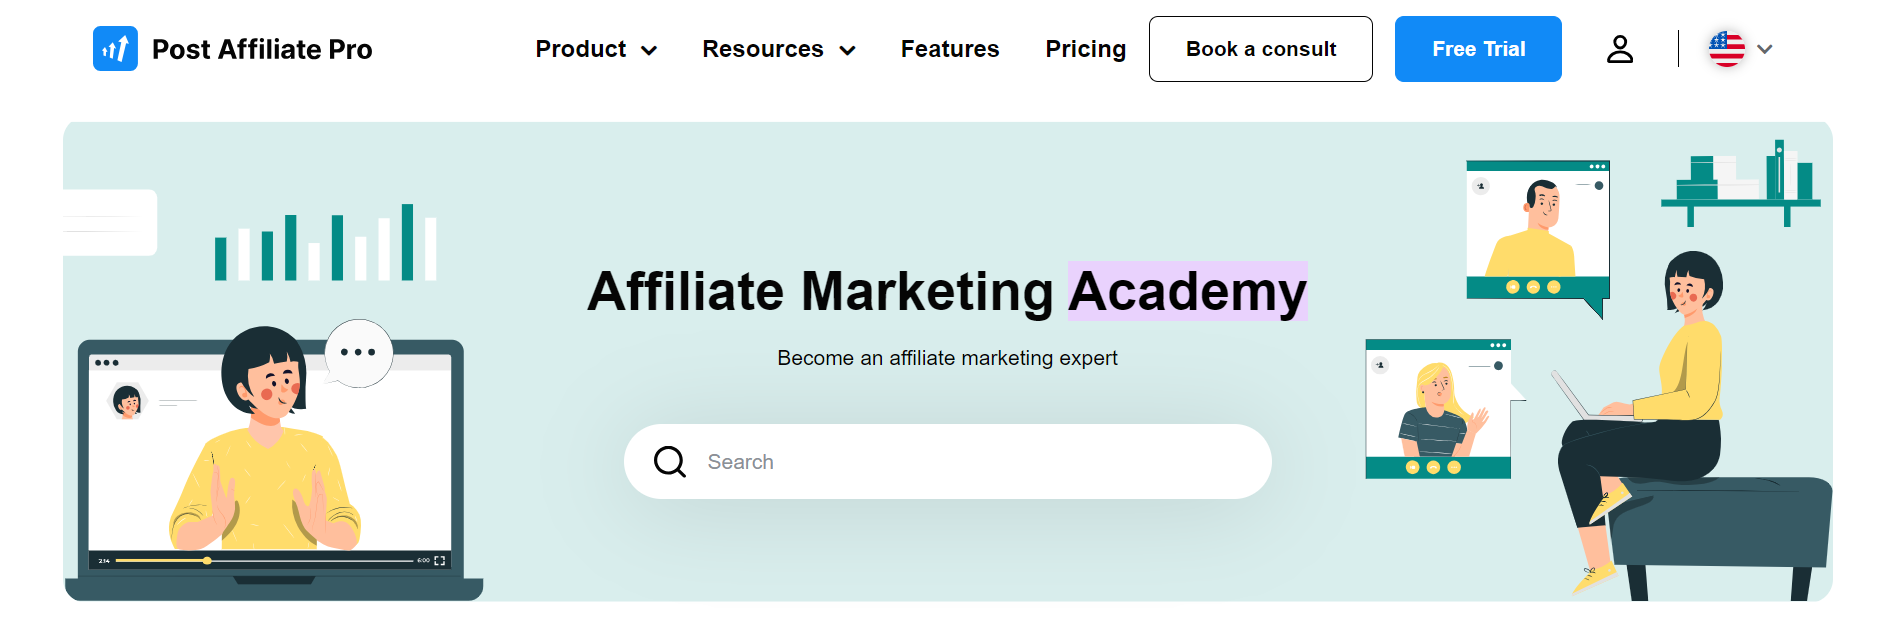 affiliate marketing academy